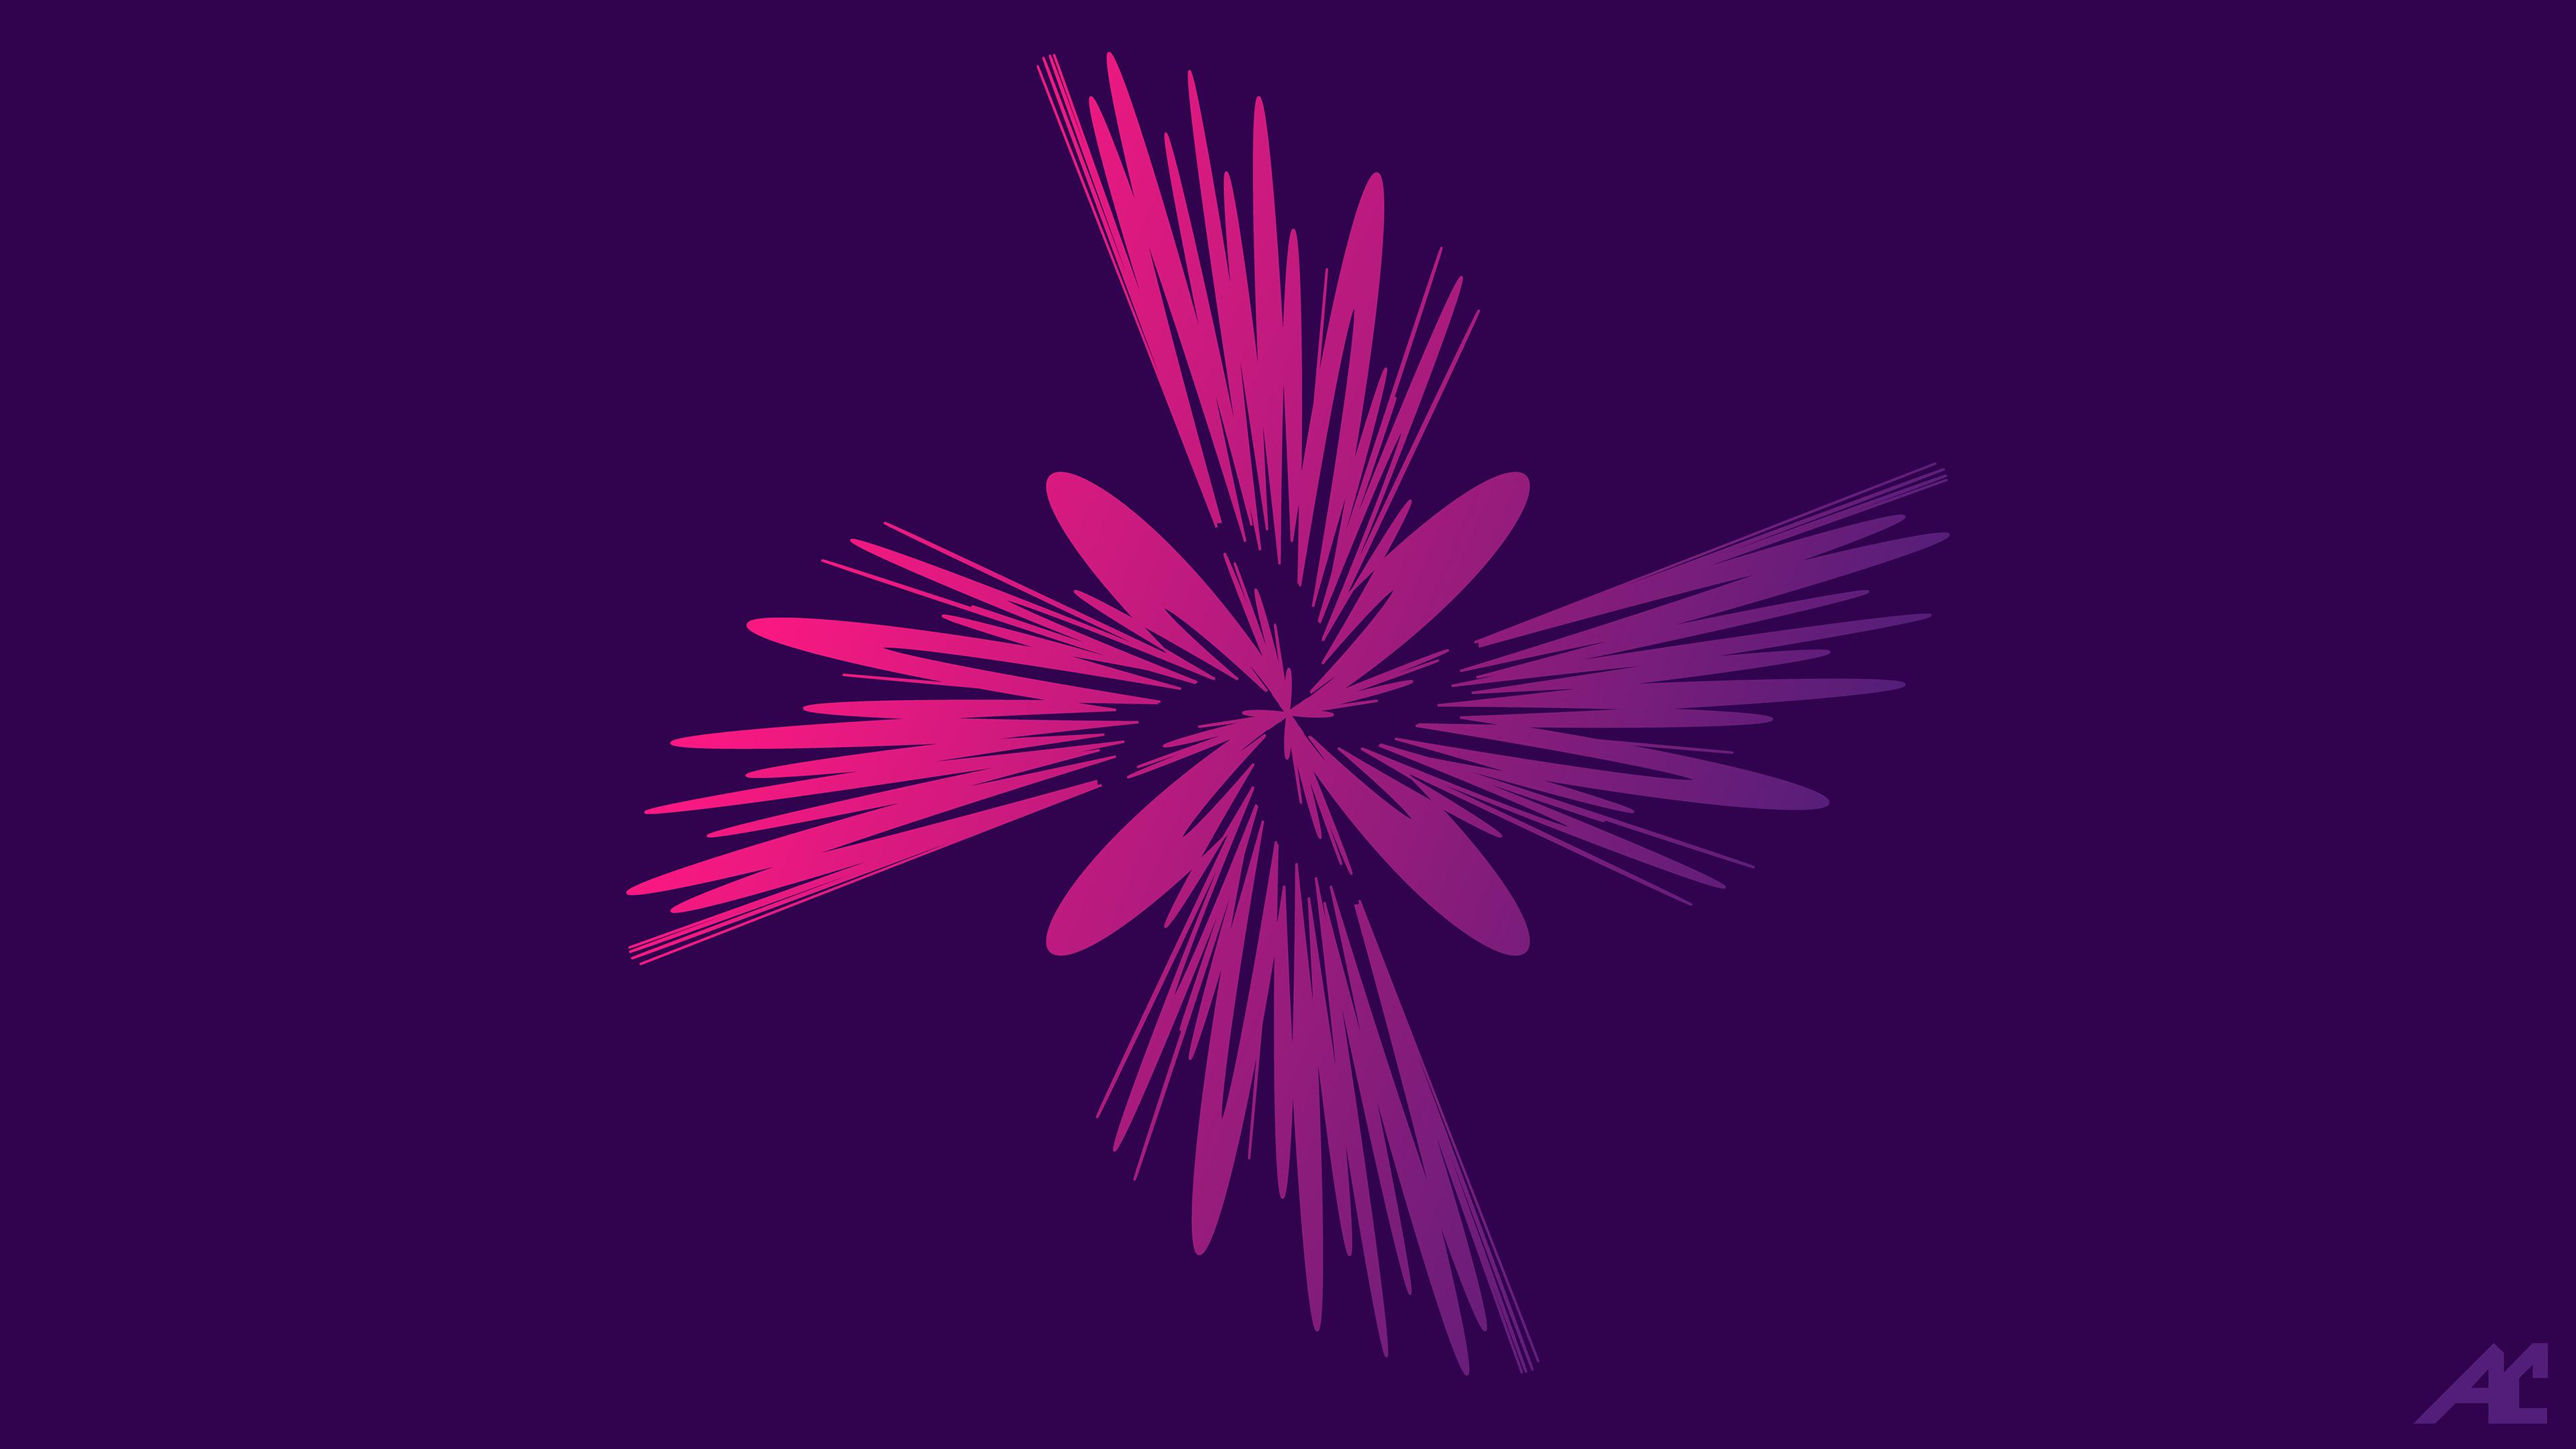 Flower Abstract 4k, HD Artist, 4k Wallpaper, Image